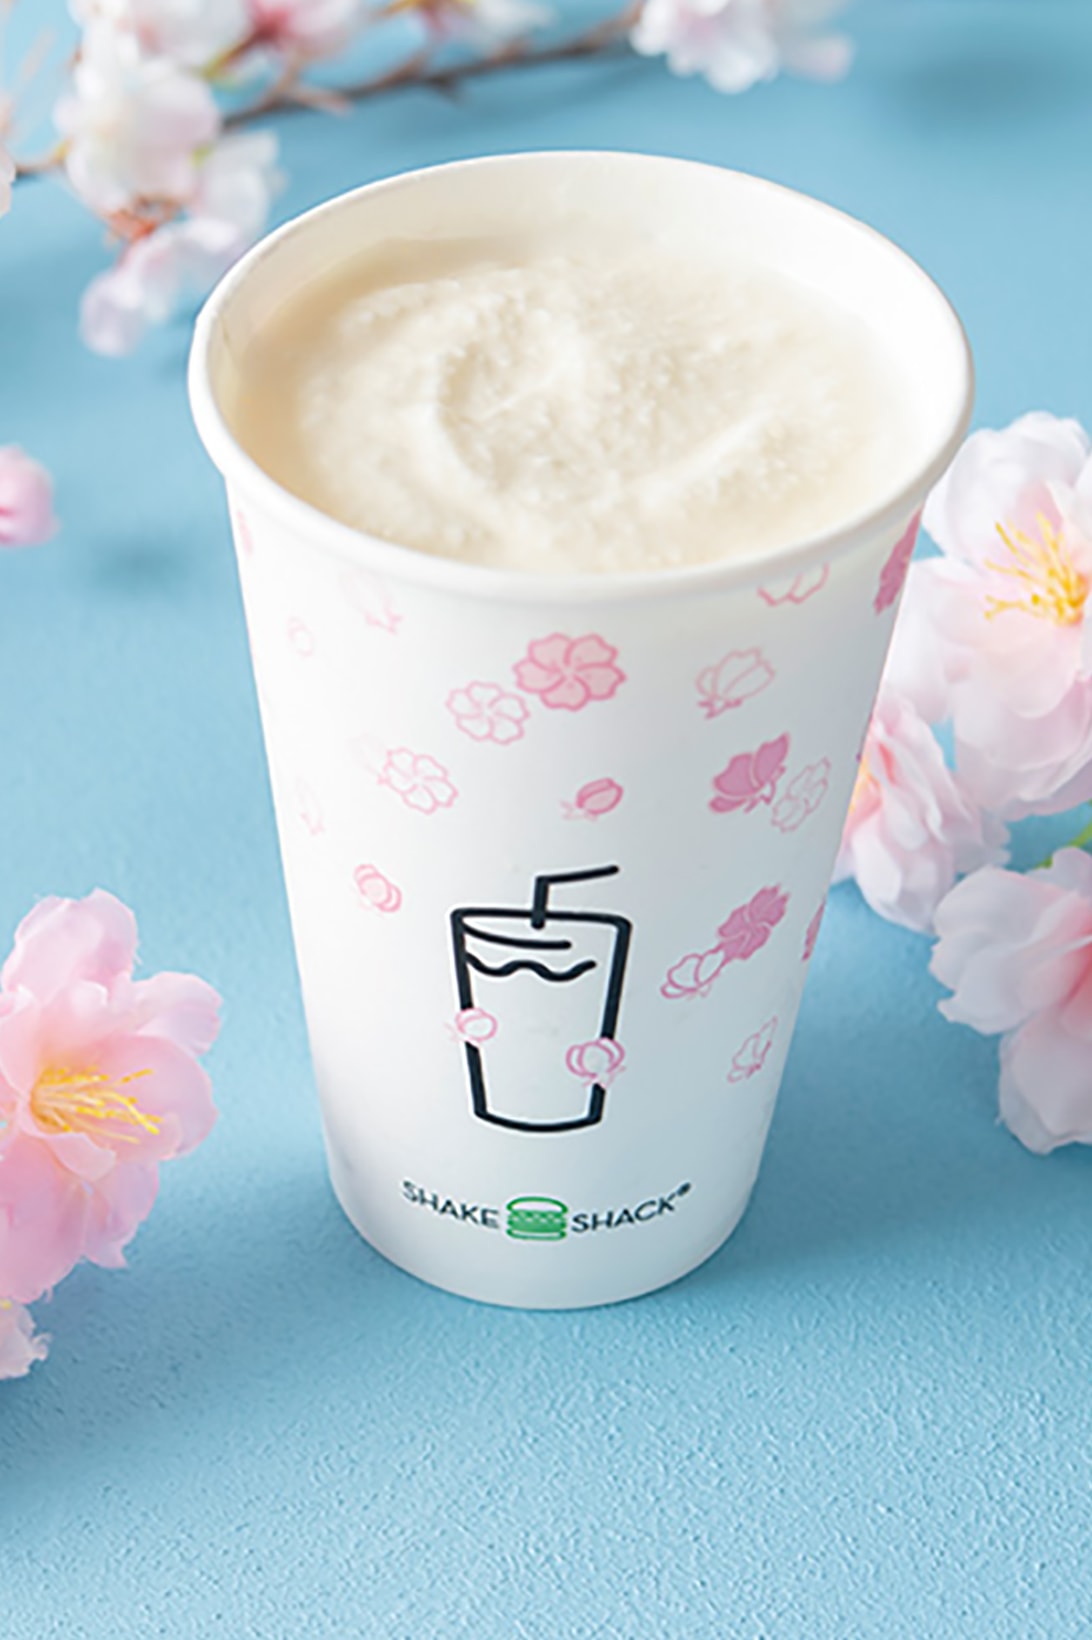 shake shack japan sakura cherry blossom drinks shack-ura